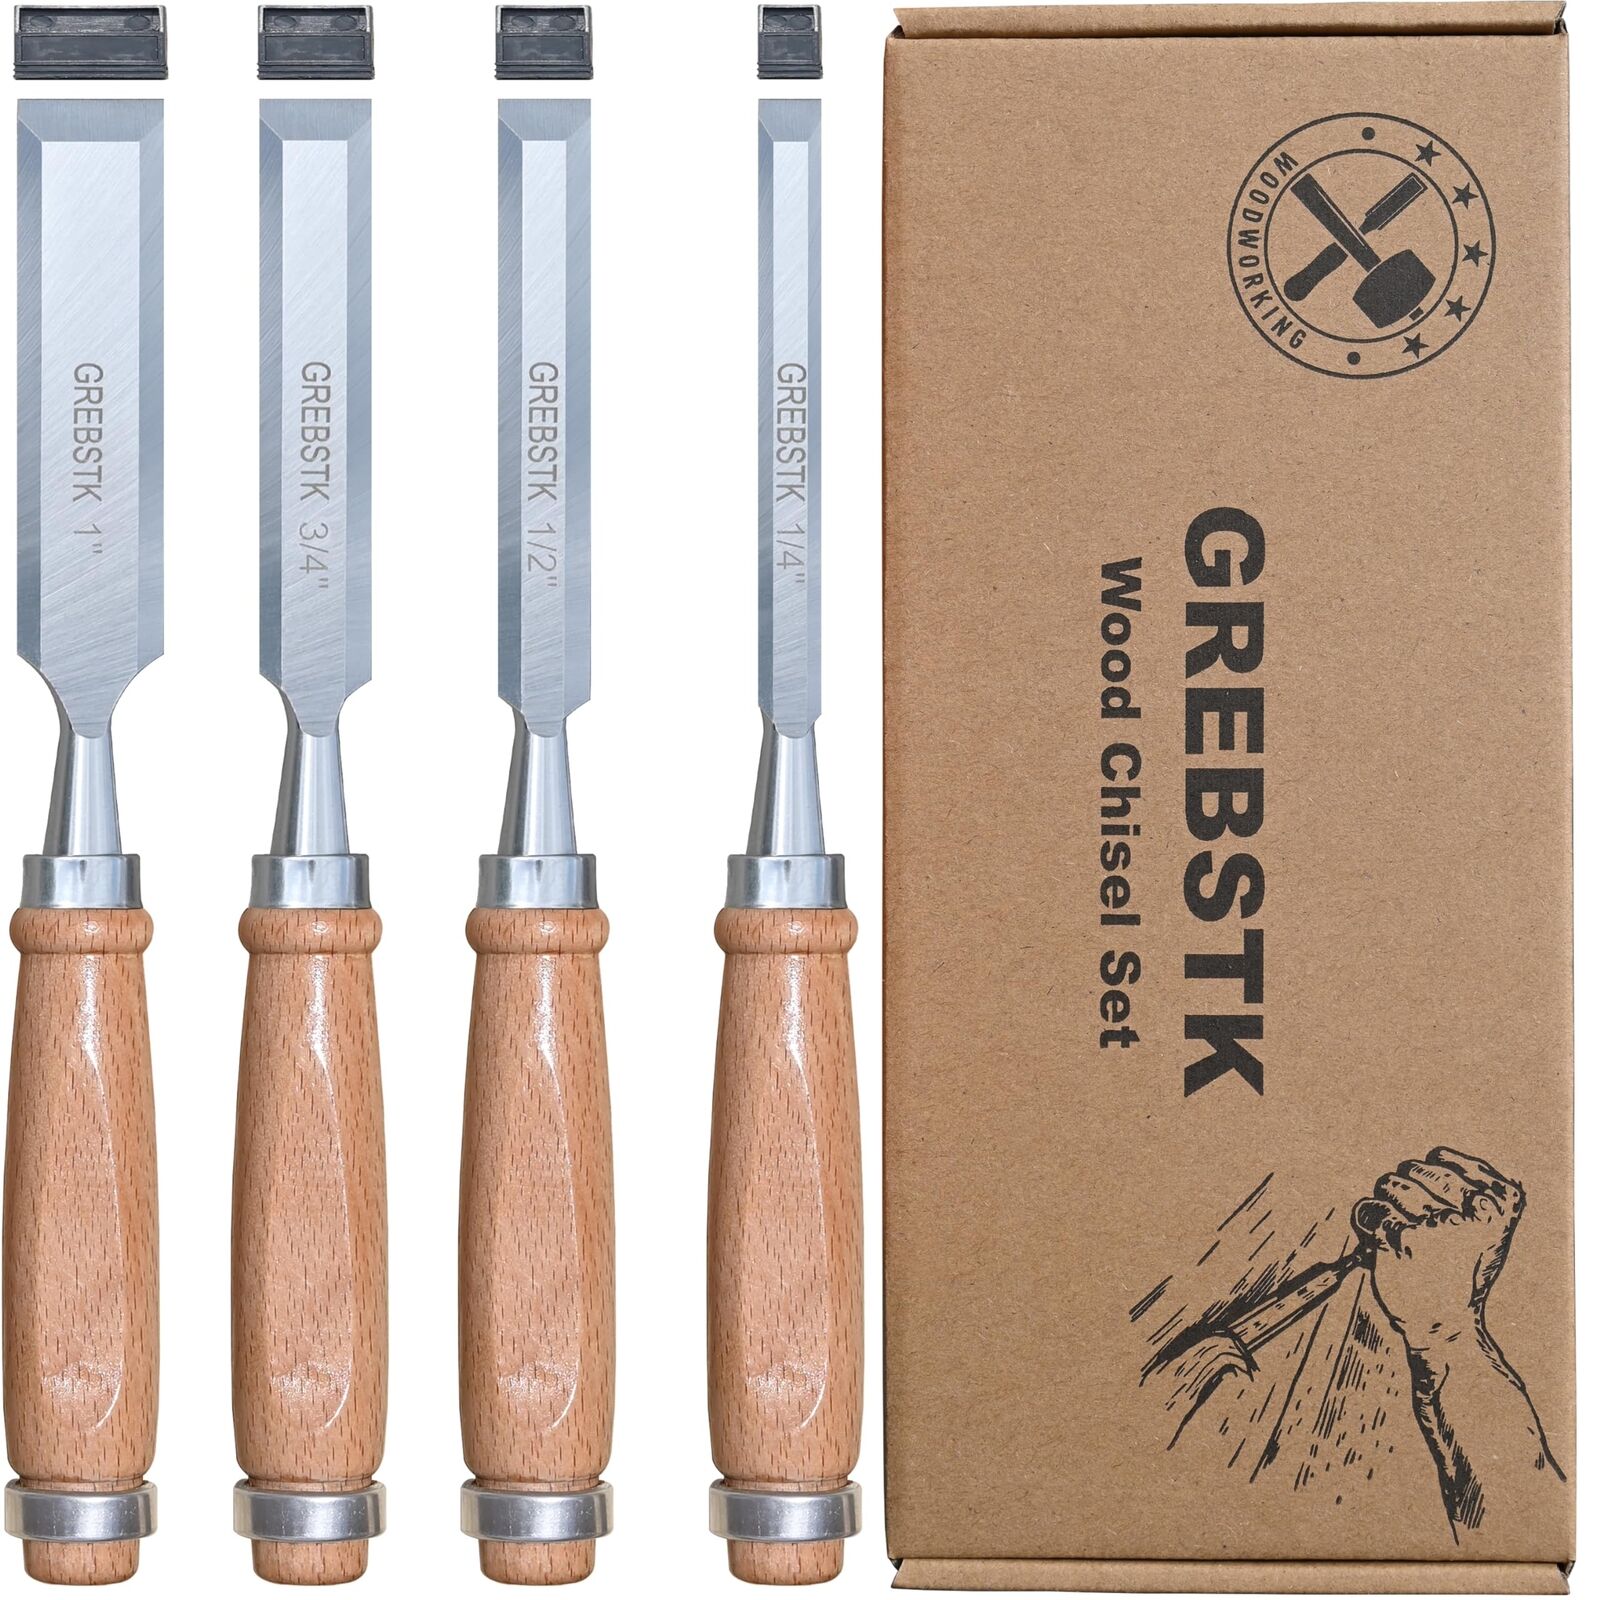 GREBSTK Professional Wood Chisel Set for Woodworking, Sturdy Chrome Vanadium ...